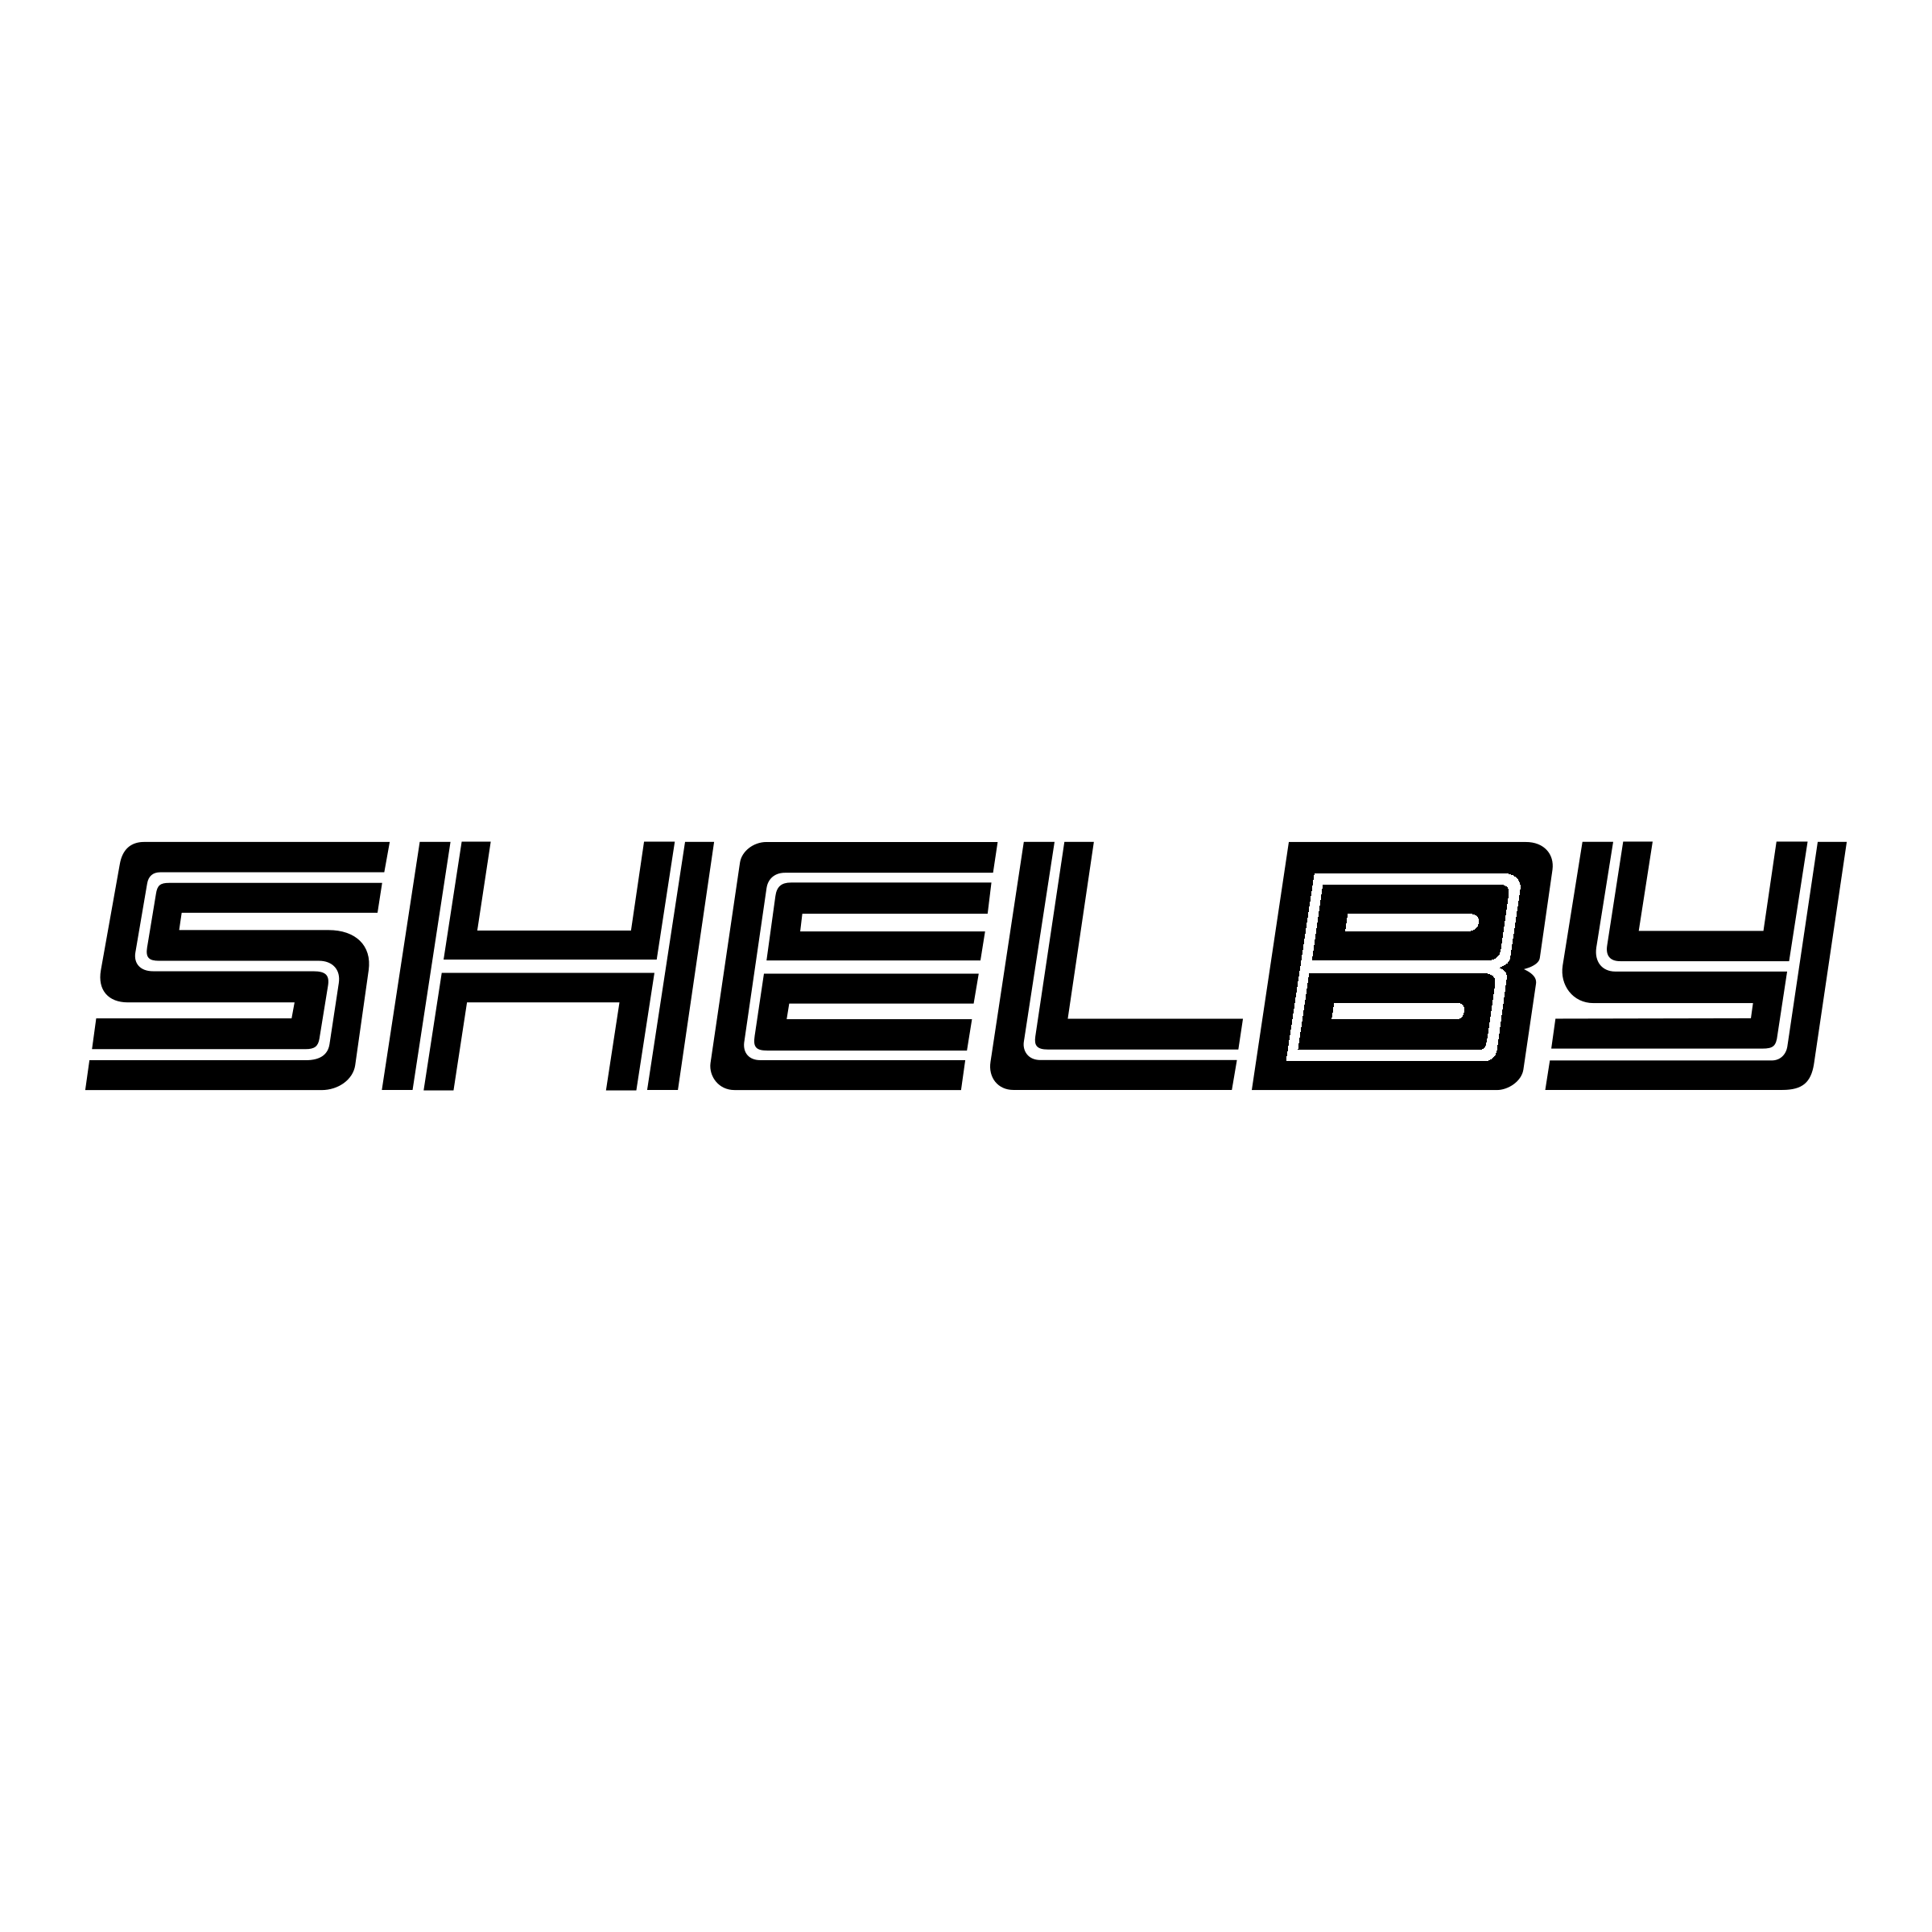 White Shelby Logo - Shelby Logo Black And White | ED | Pinterest | Logos, Shelby logo ...